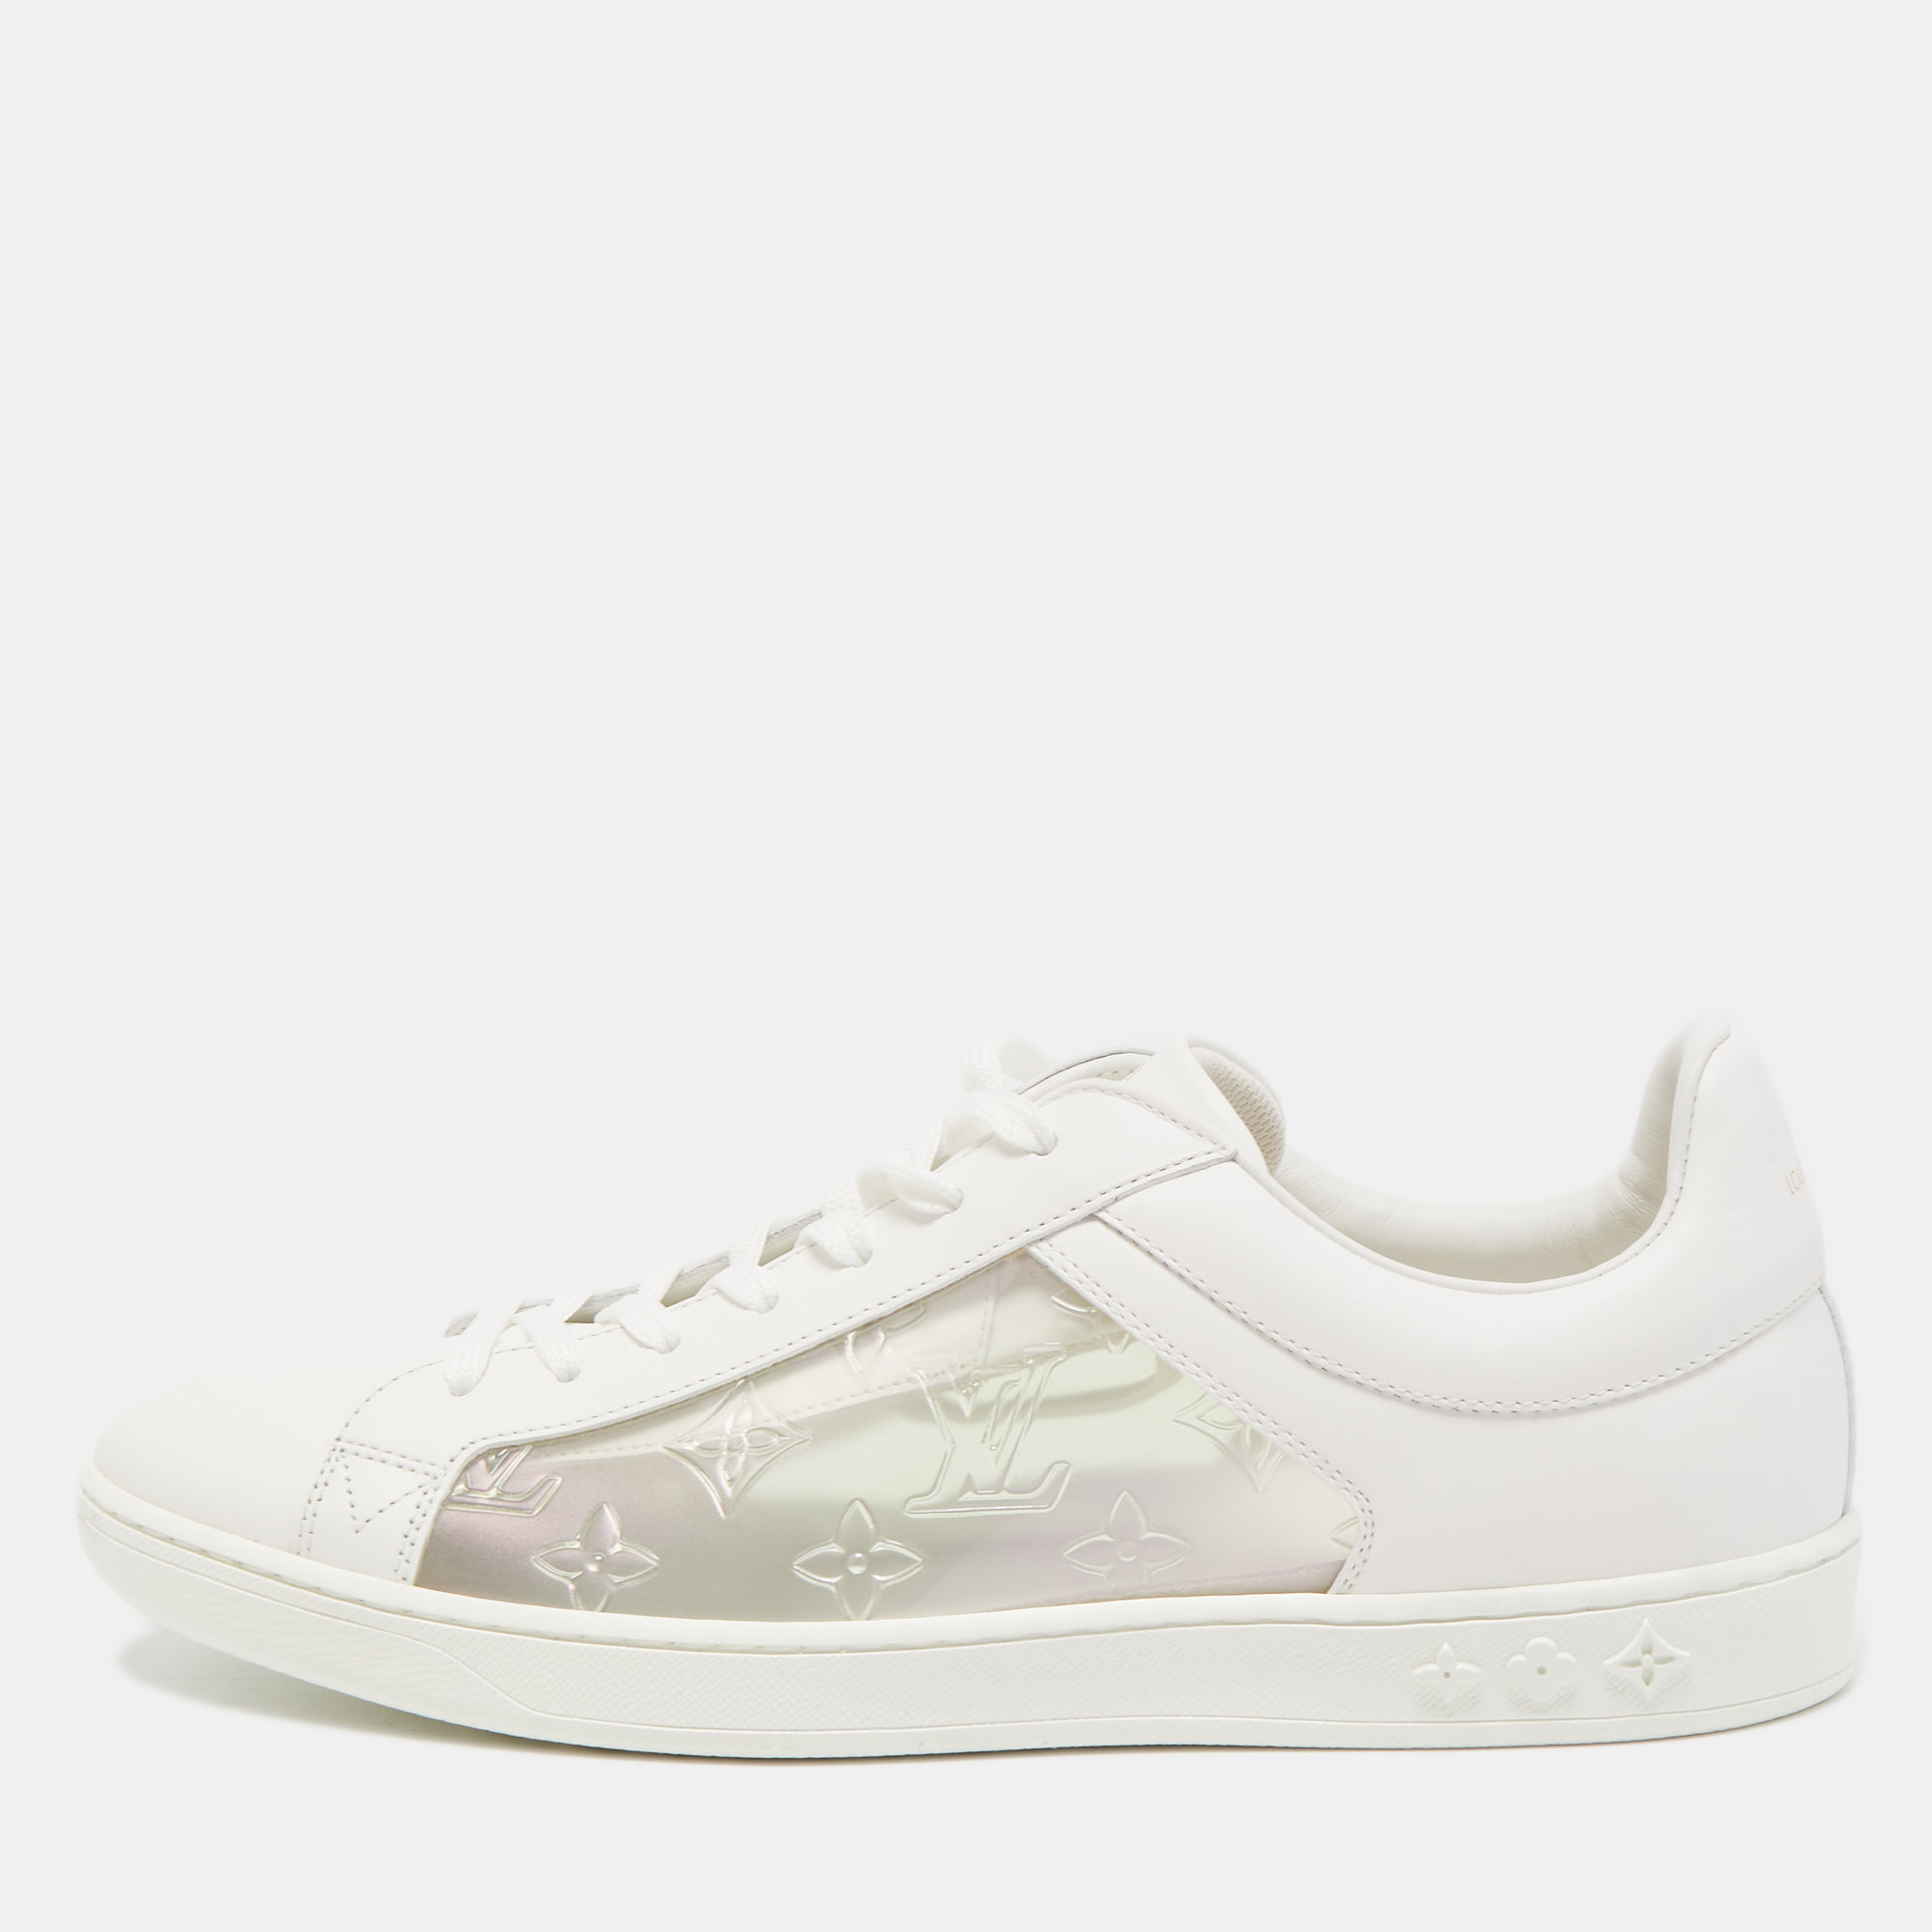 Louis Vuitton LV transparent pvc sneakers trainers shoes women ladies  footwear white